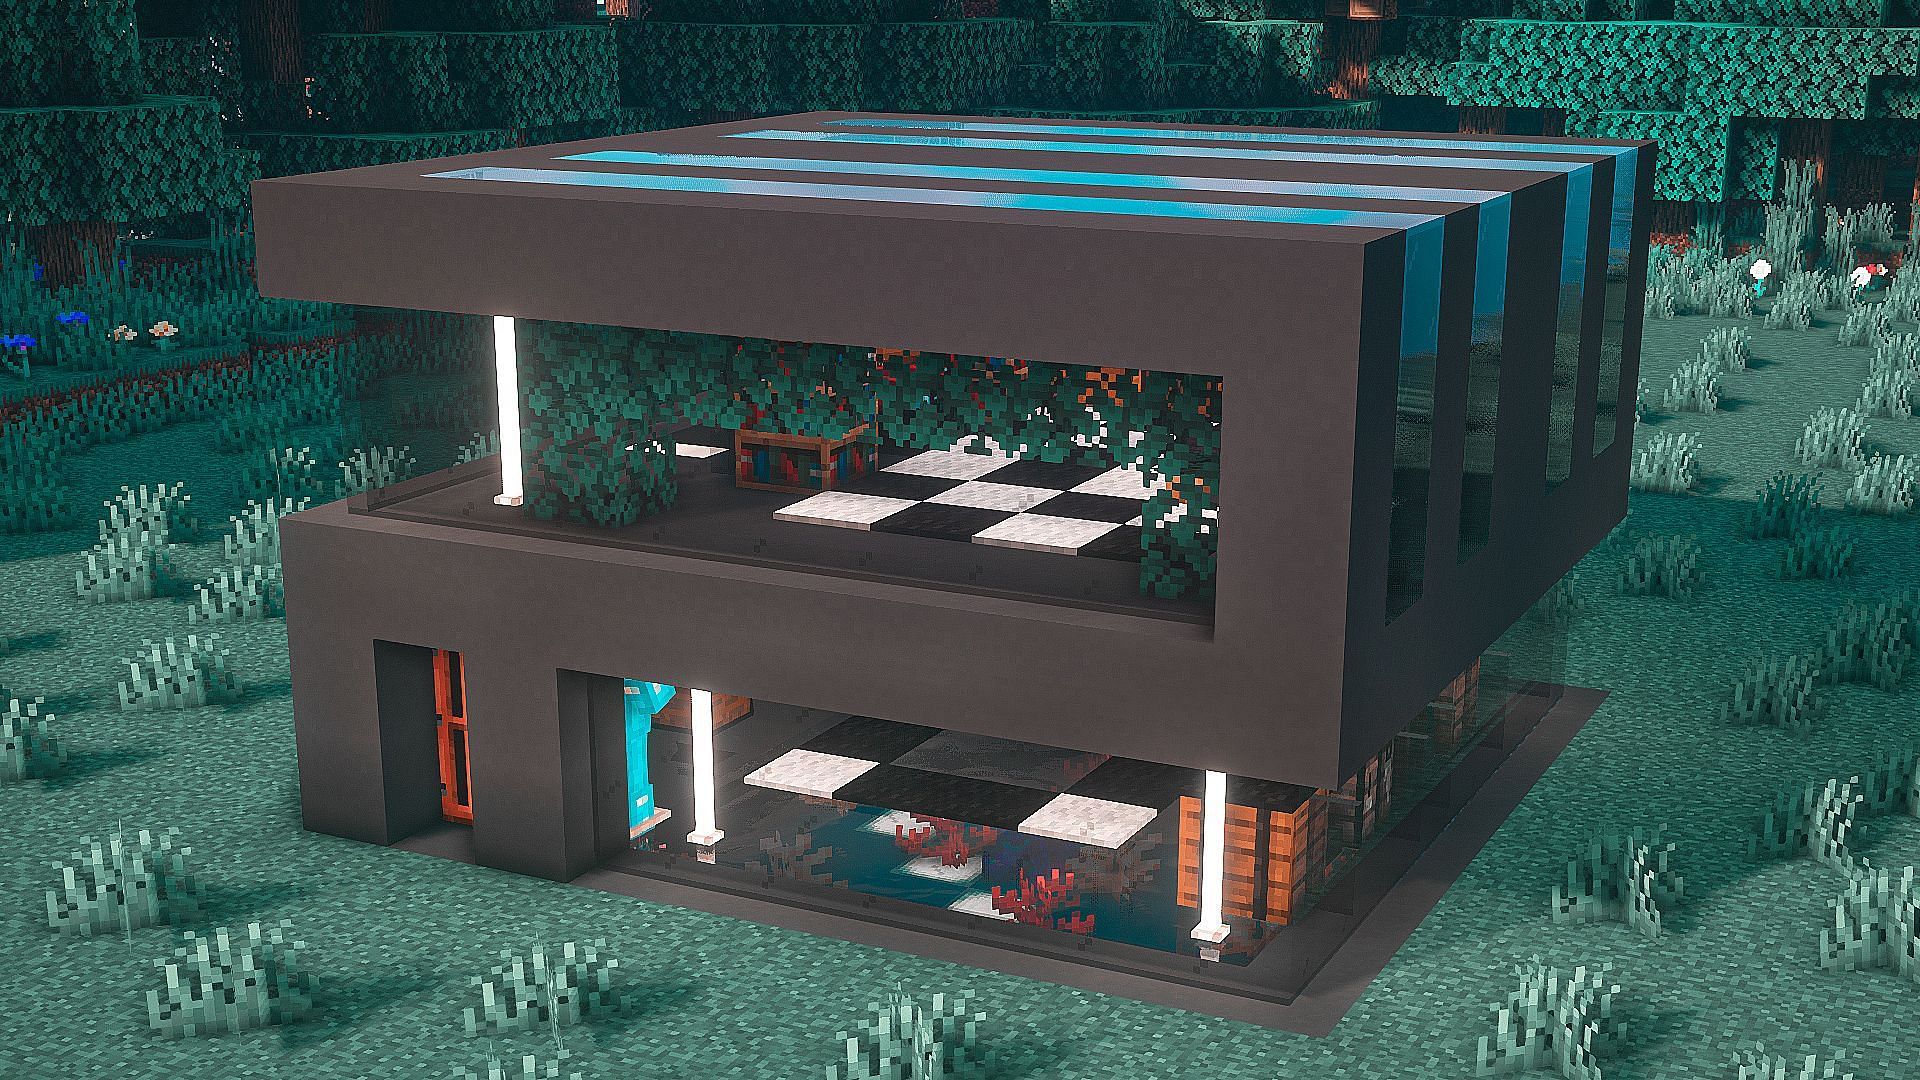 Brilliant modern house made with gray concrete blocks in Minecraft (Image via u/Kerbit Reddit)